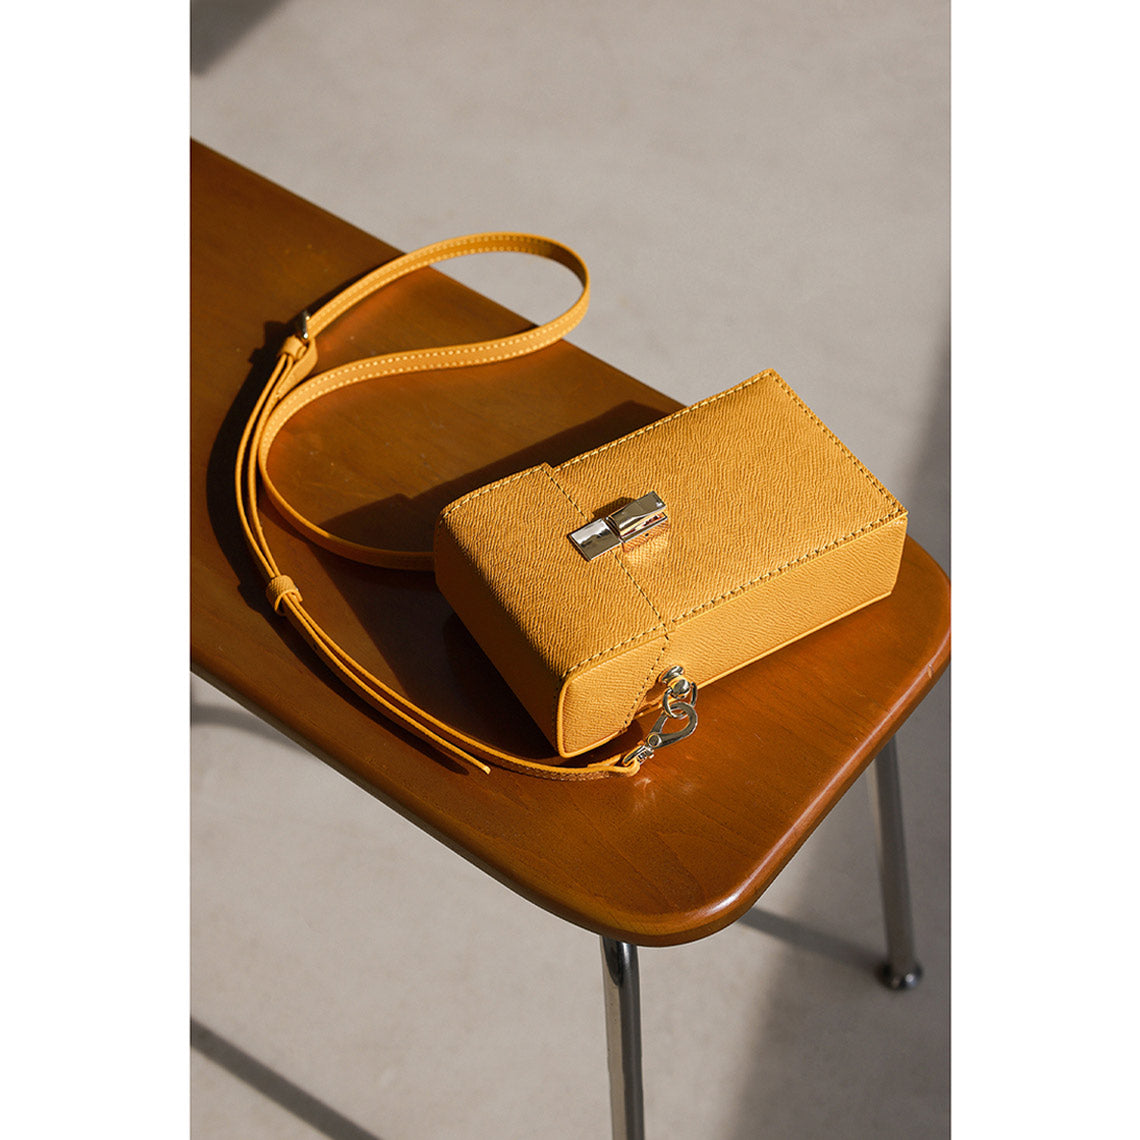 POPSEWING® Leather Phone Bag DIY Kit